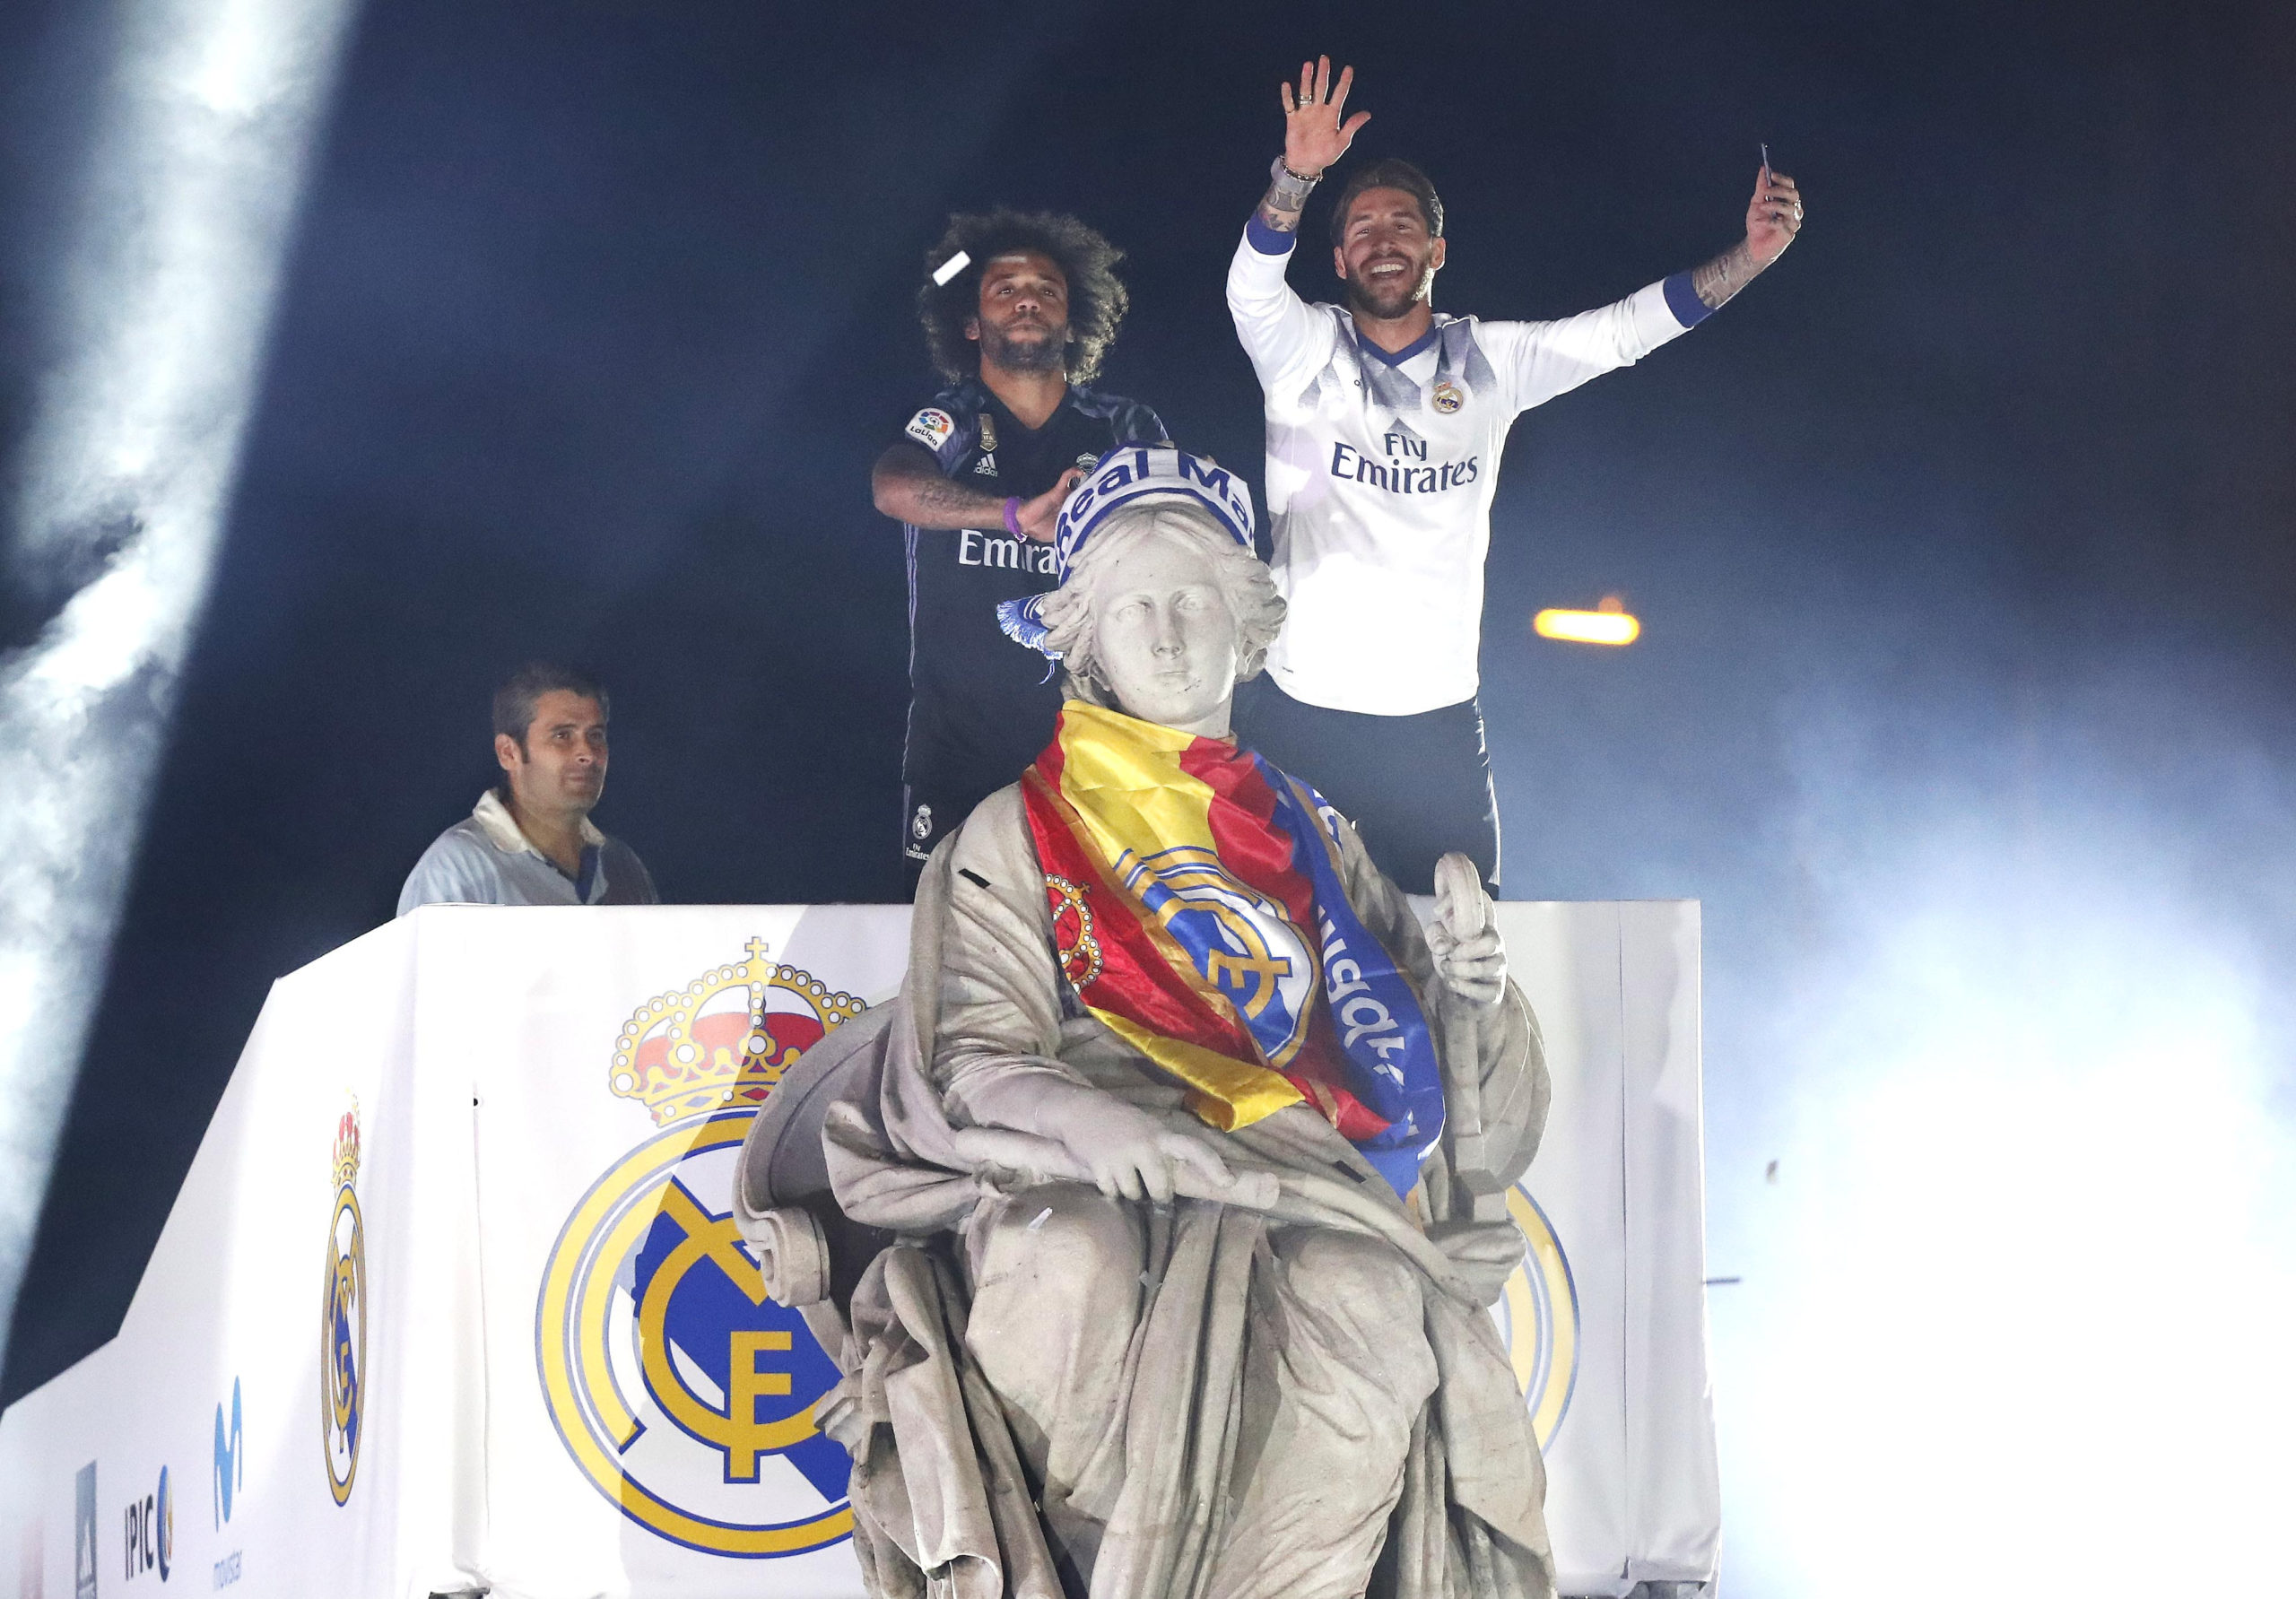 Real Madrid last LaLiga title celebration at Cibeles 2016 17 4 scaled - La razón del porqué el Real Madrid celebra en Las Cibeles